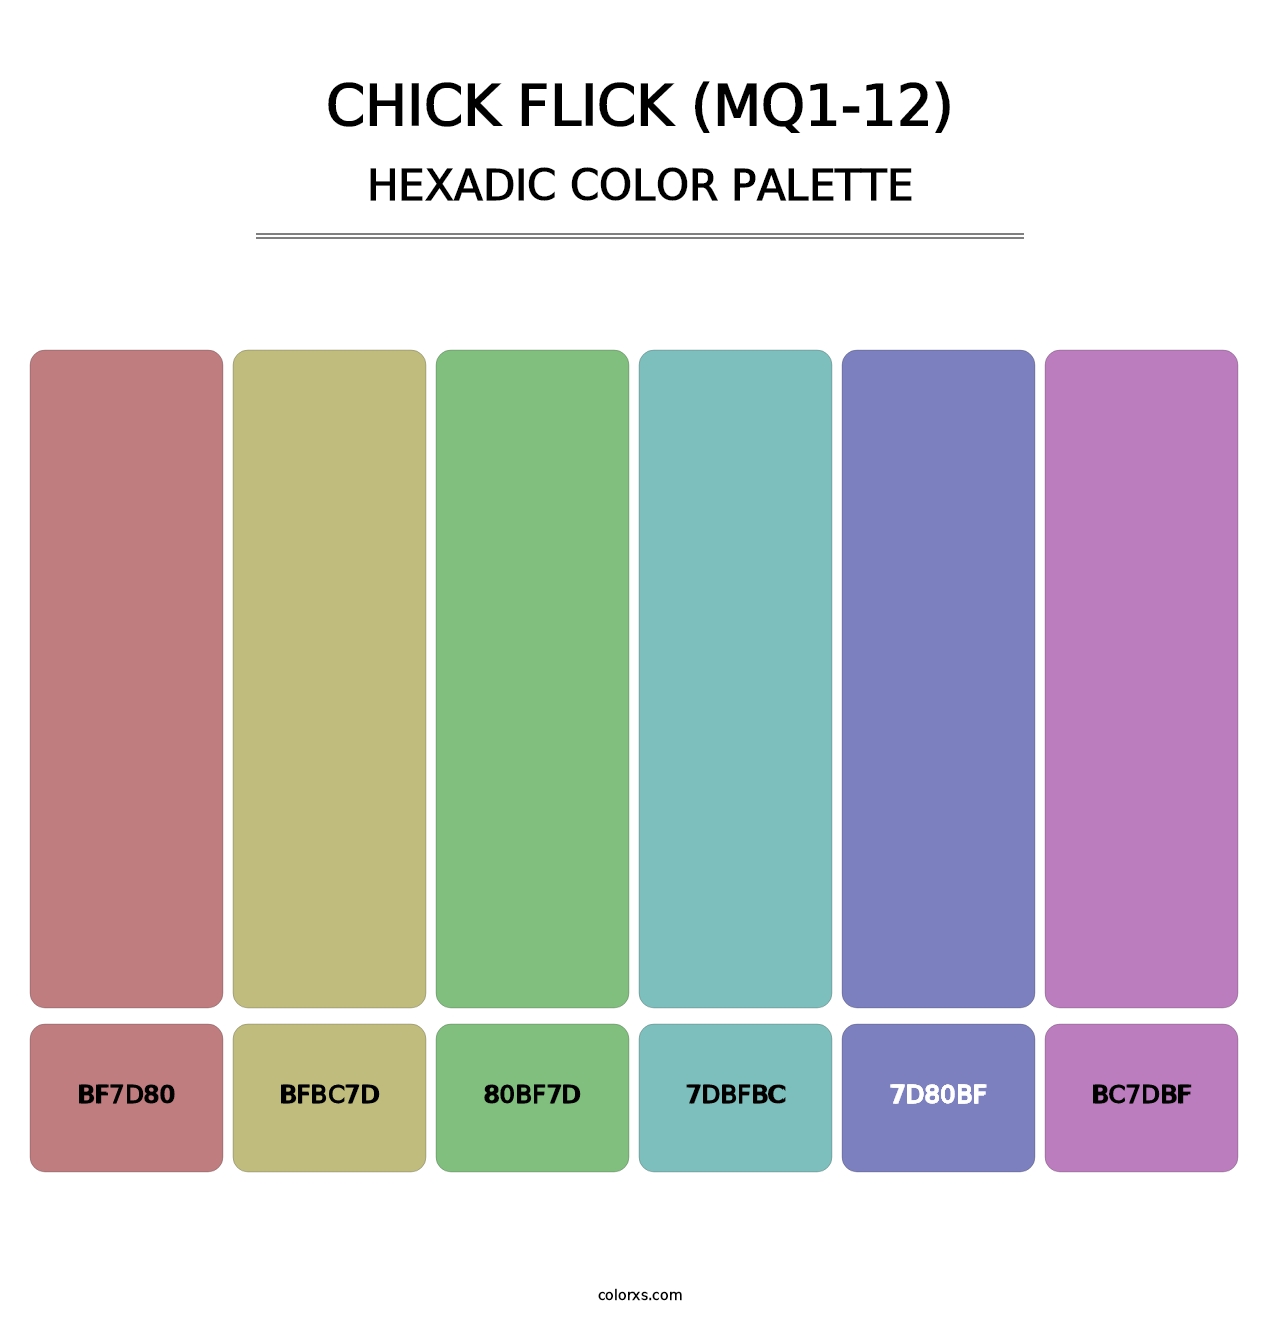 Chick Flick (MQ1-12) - Hexadic Color Palette